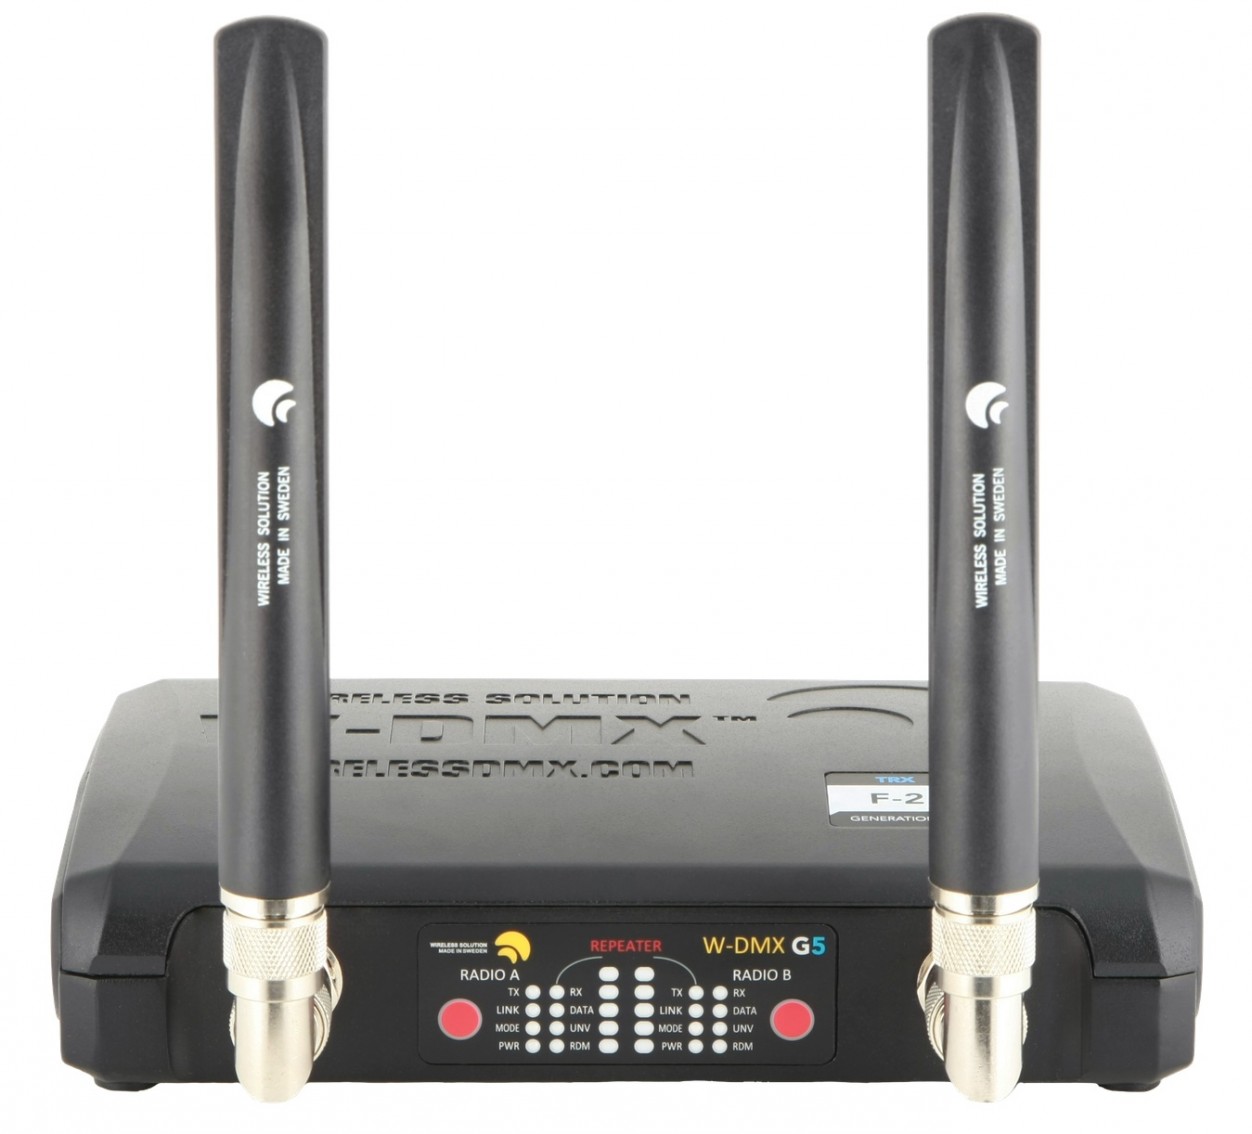 Wireless Solution BlackBox F-2 G5 радио передатчик, приёмник и ретранслятор 1024 каналов DMX